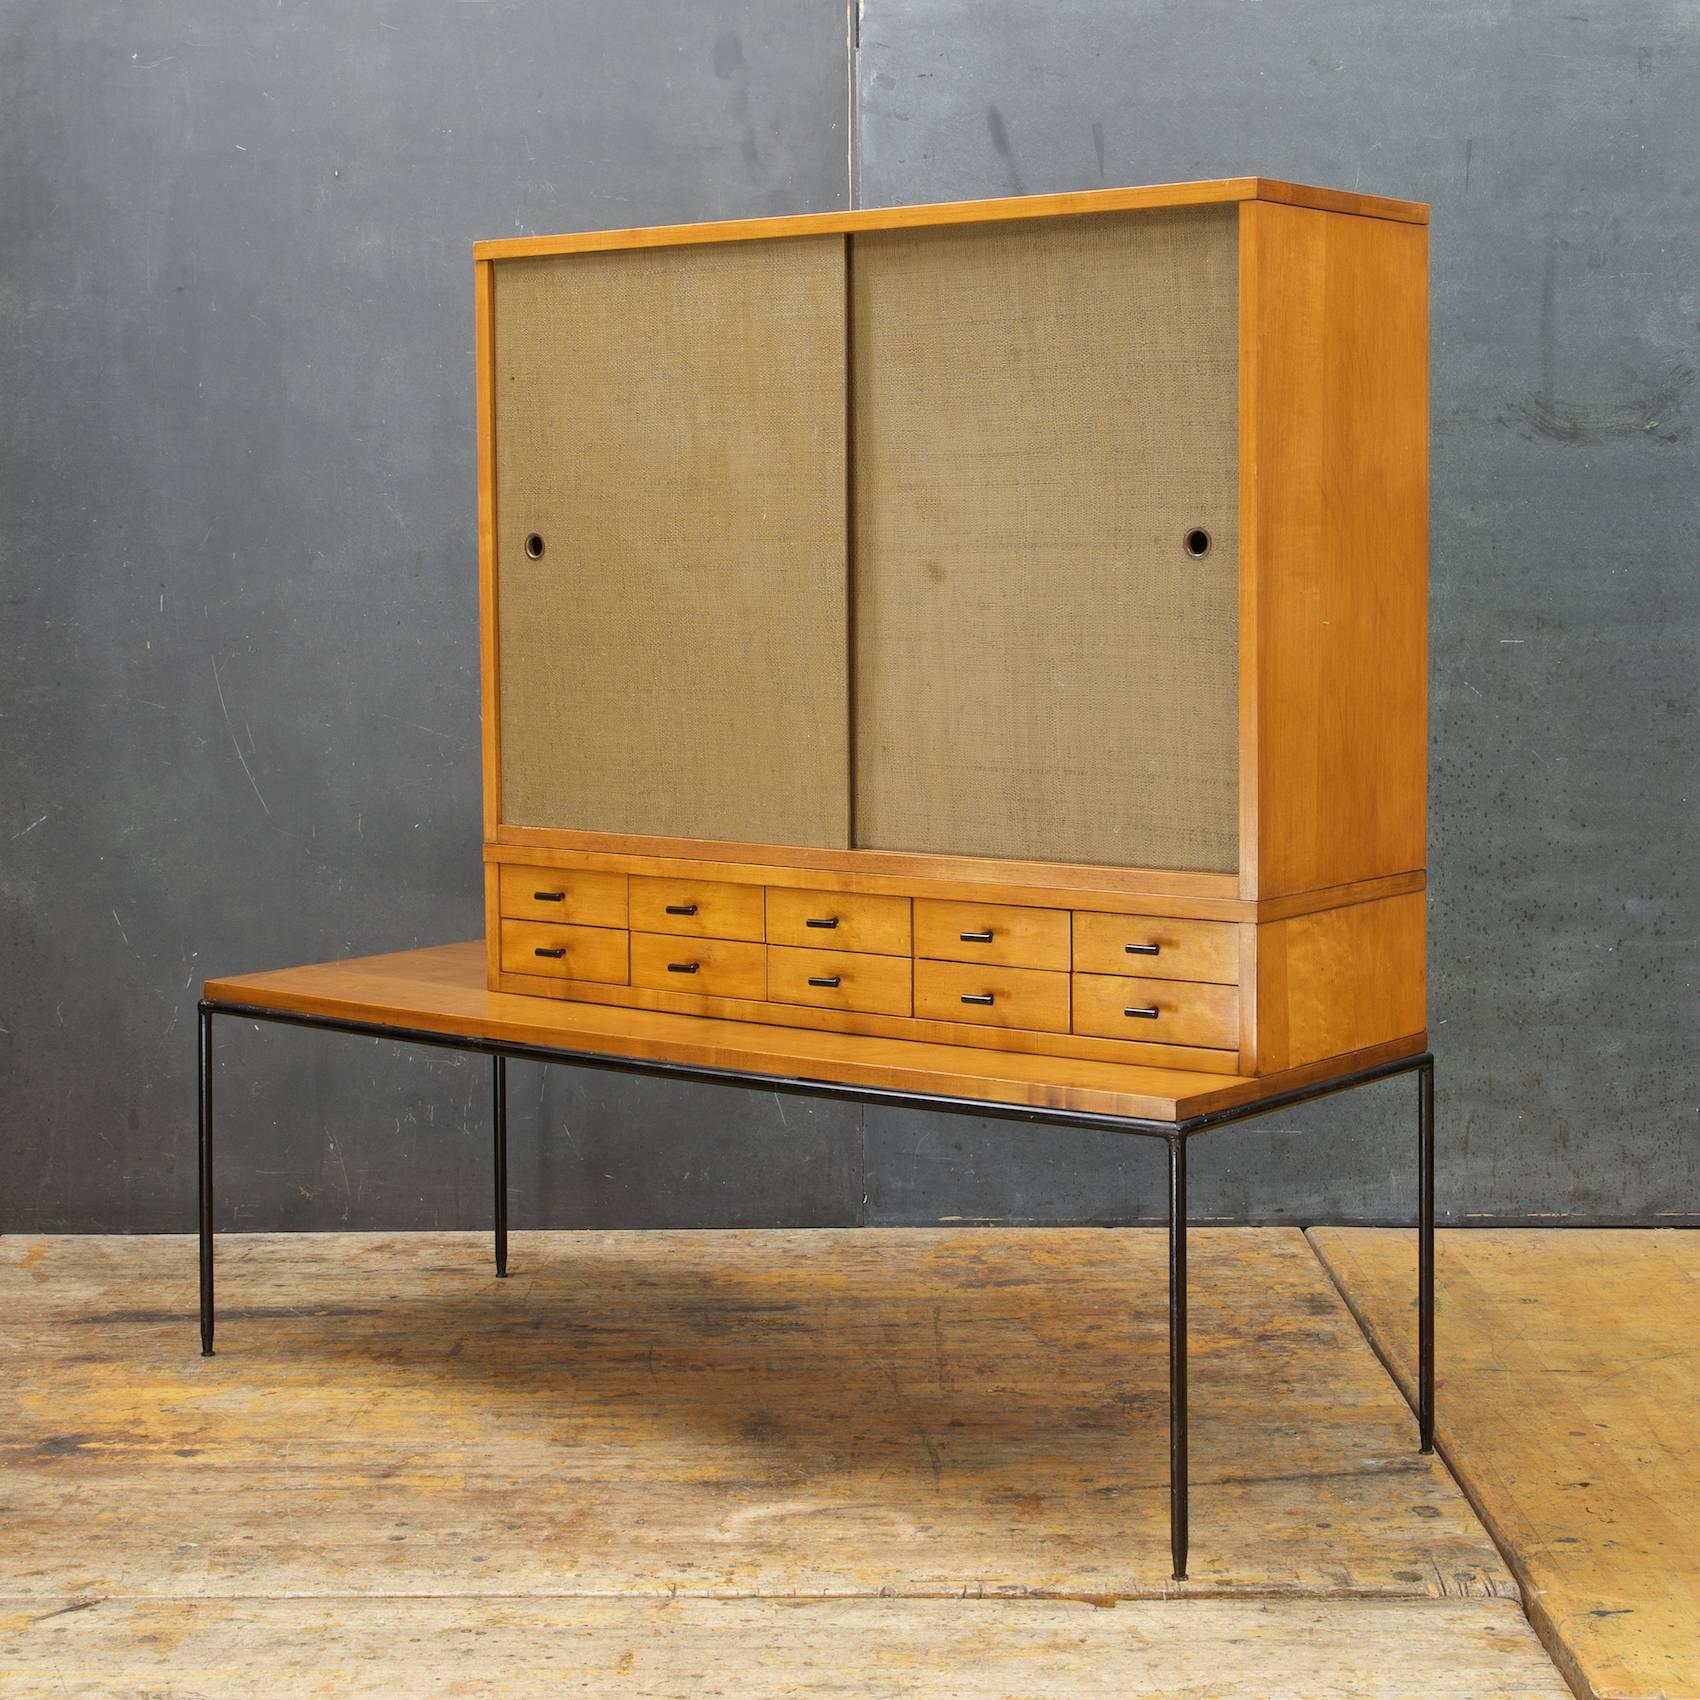 In original finish, a rare ten-drawer modular cabinet.